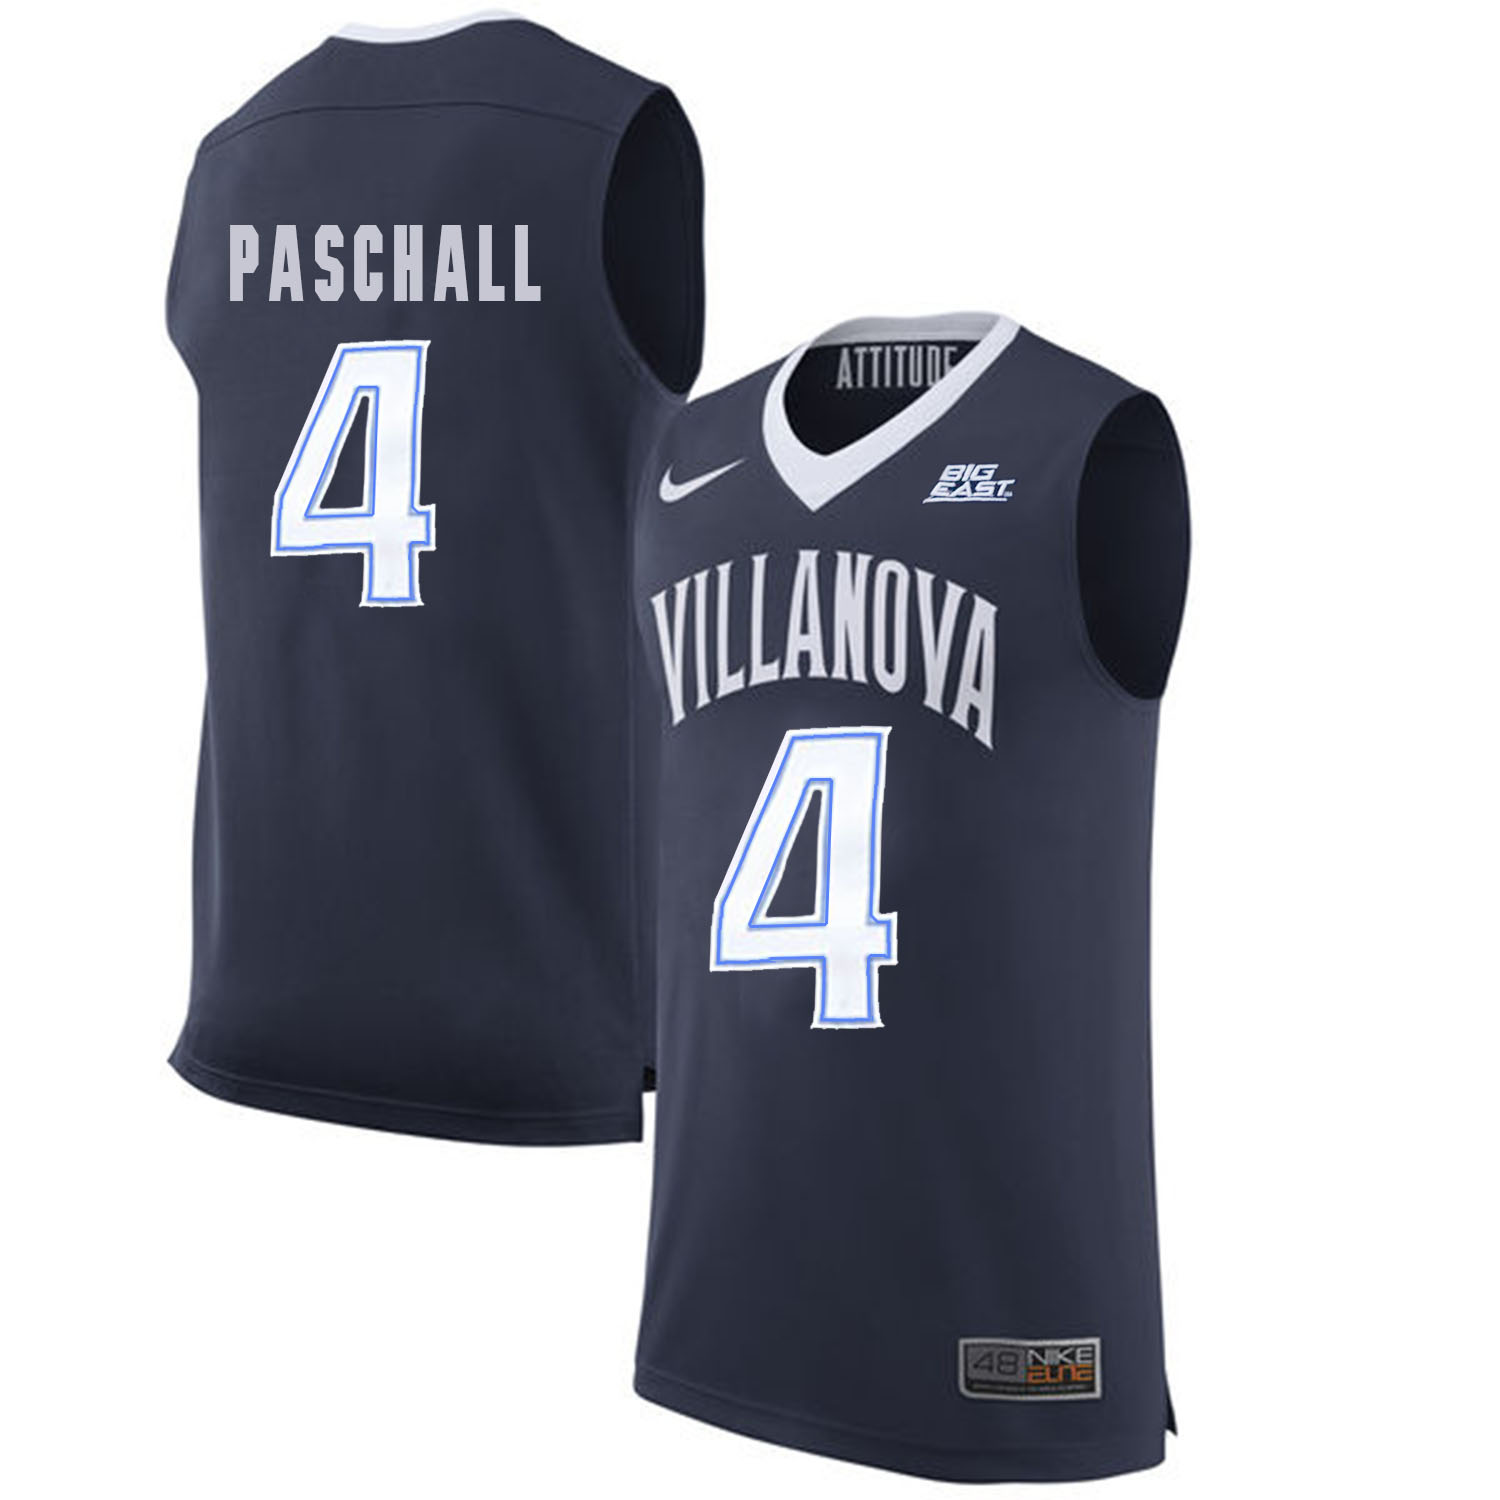 Villanova Wildcats 4 Eric Paschall Navy College Basketball Elite Jersey